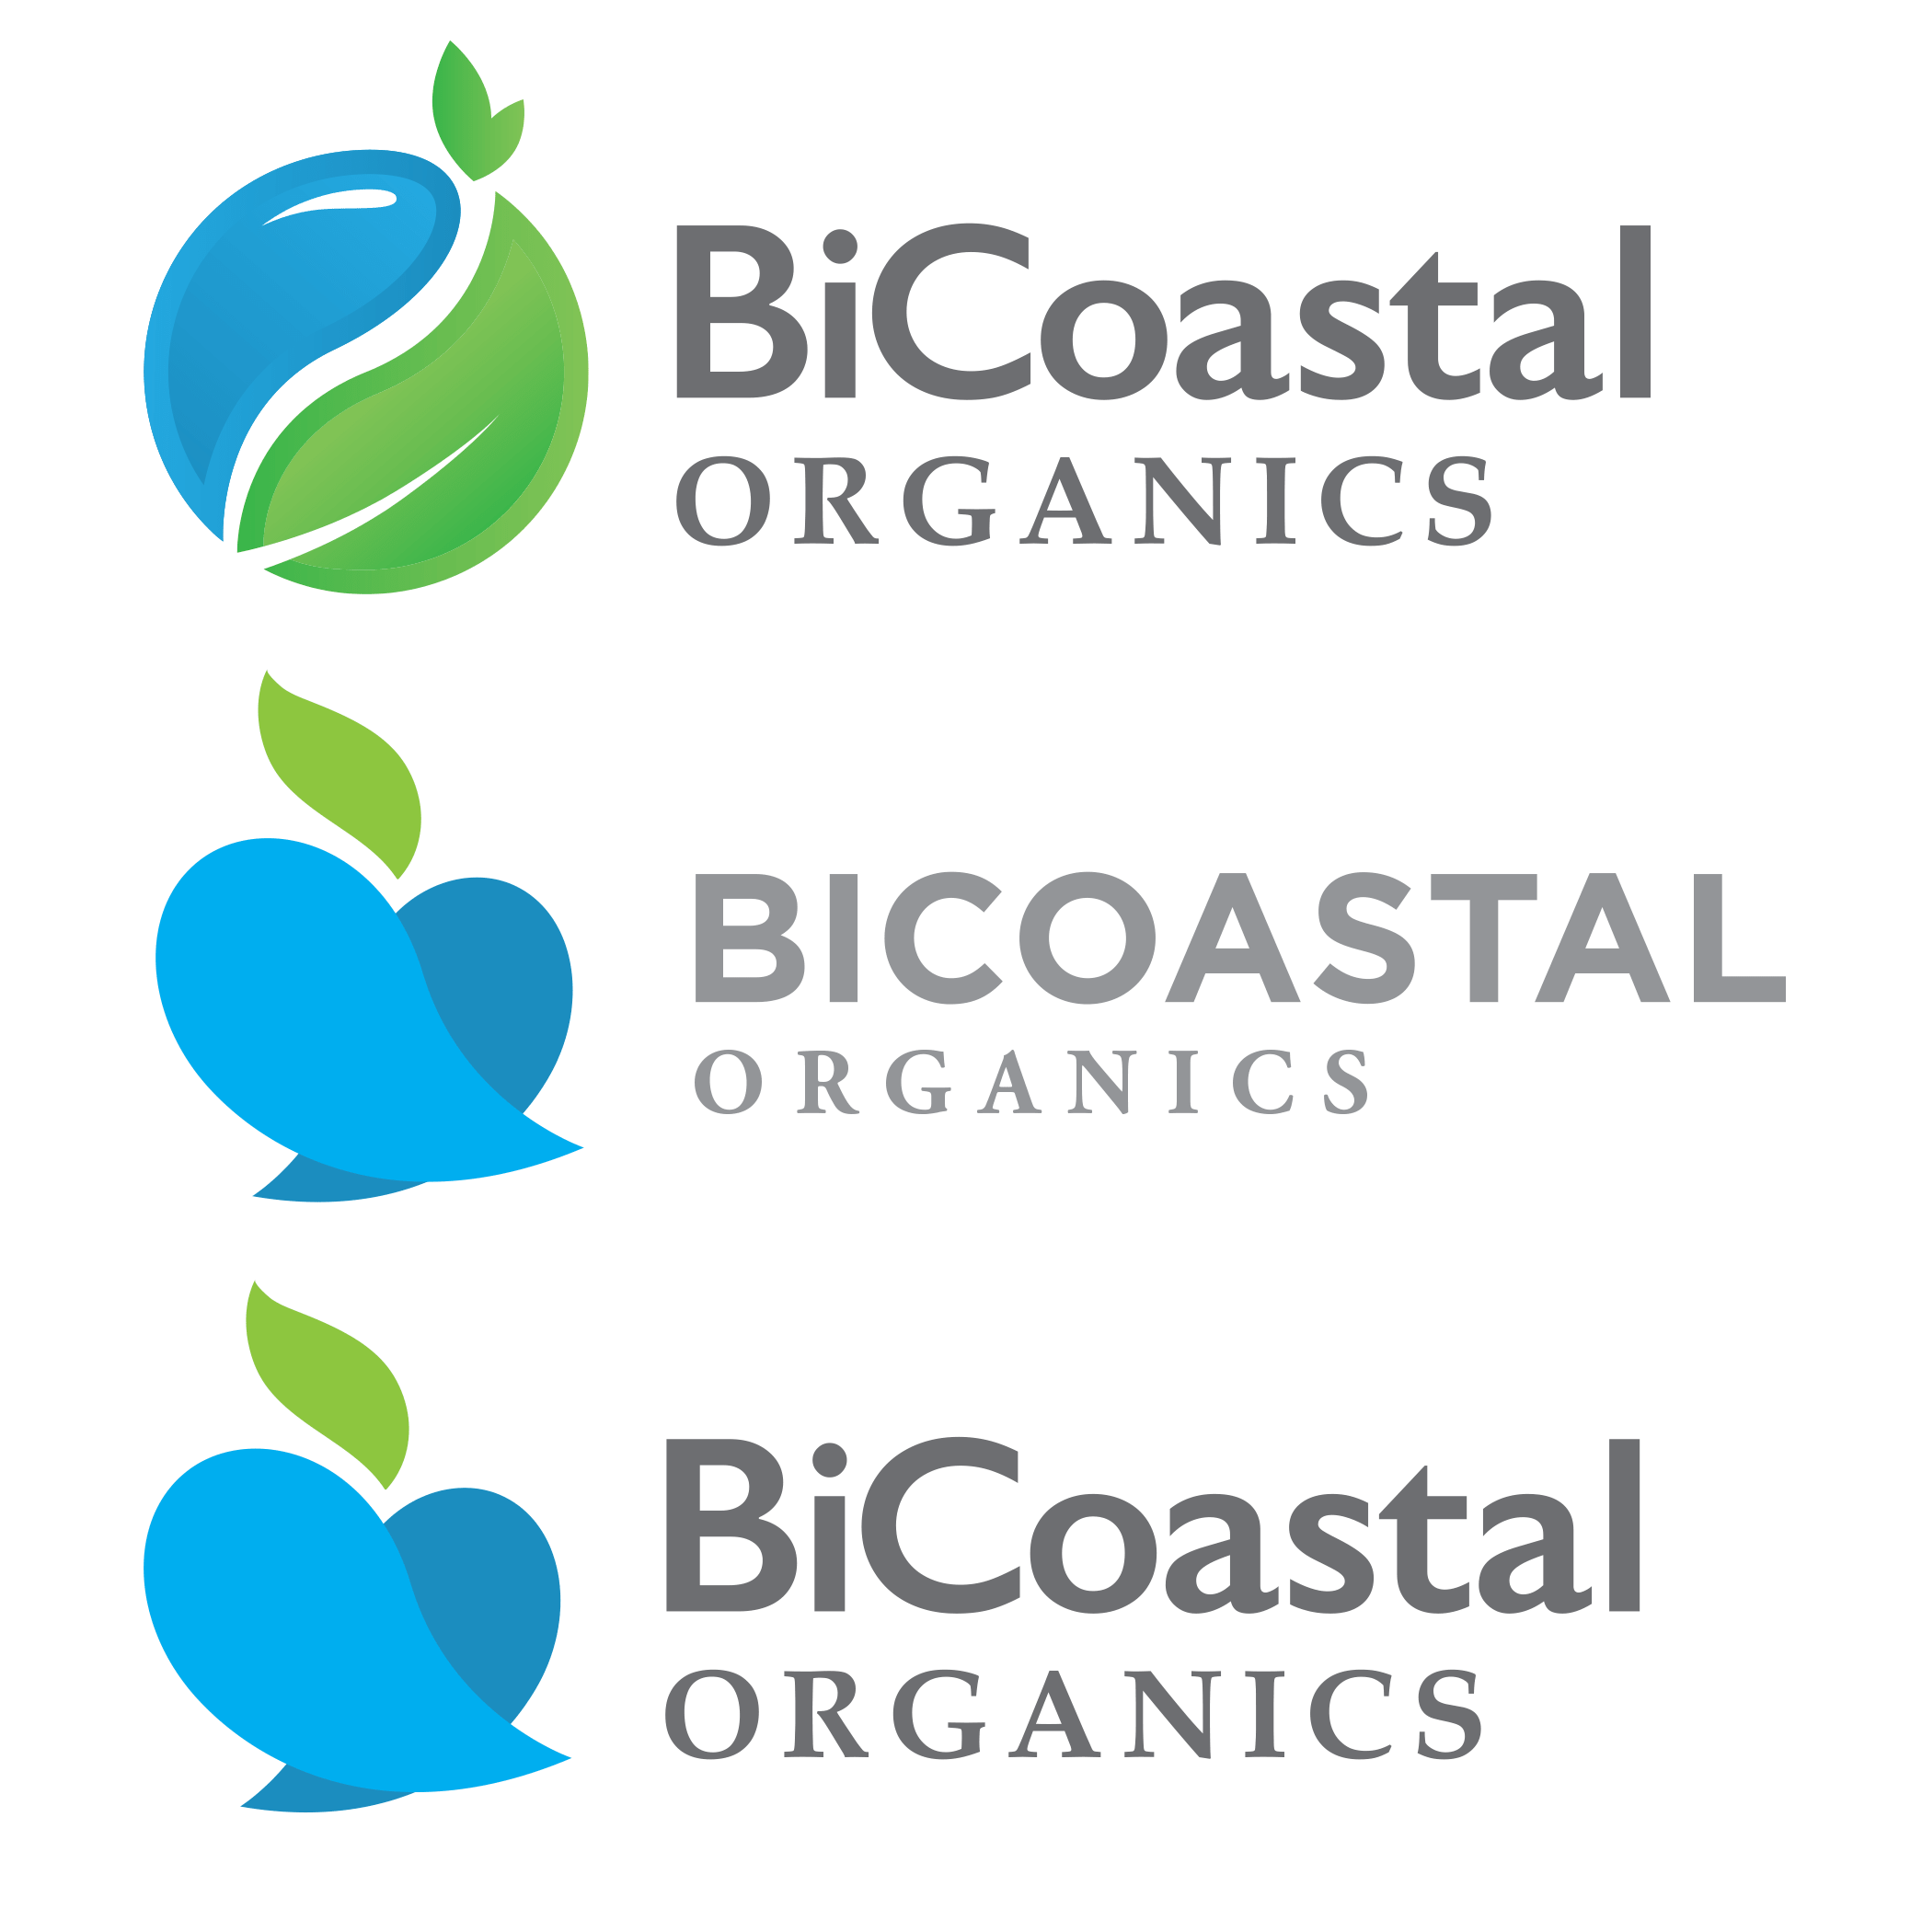 BiCoastal Organics